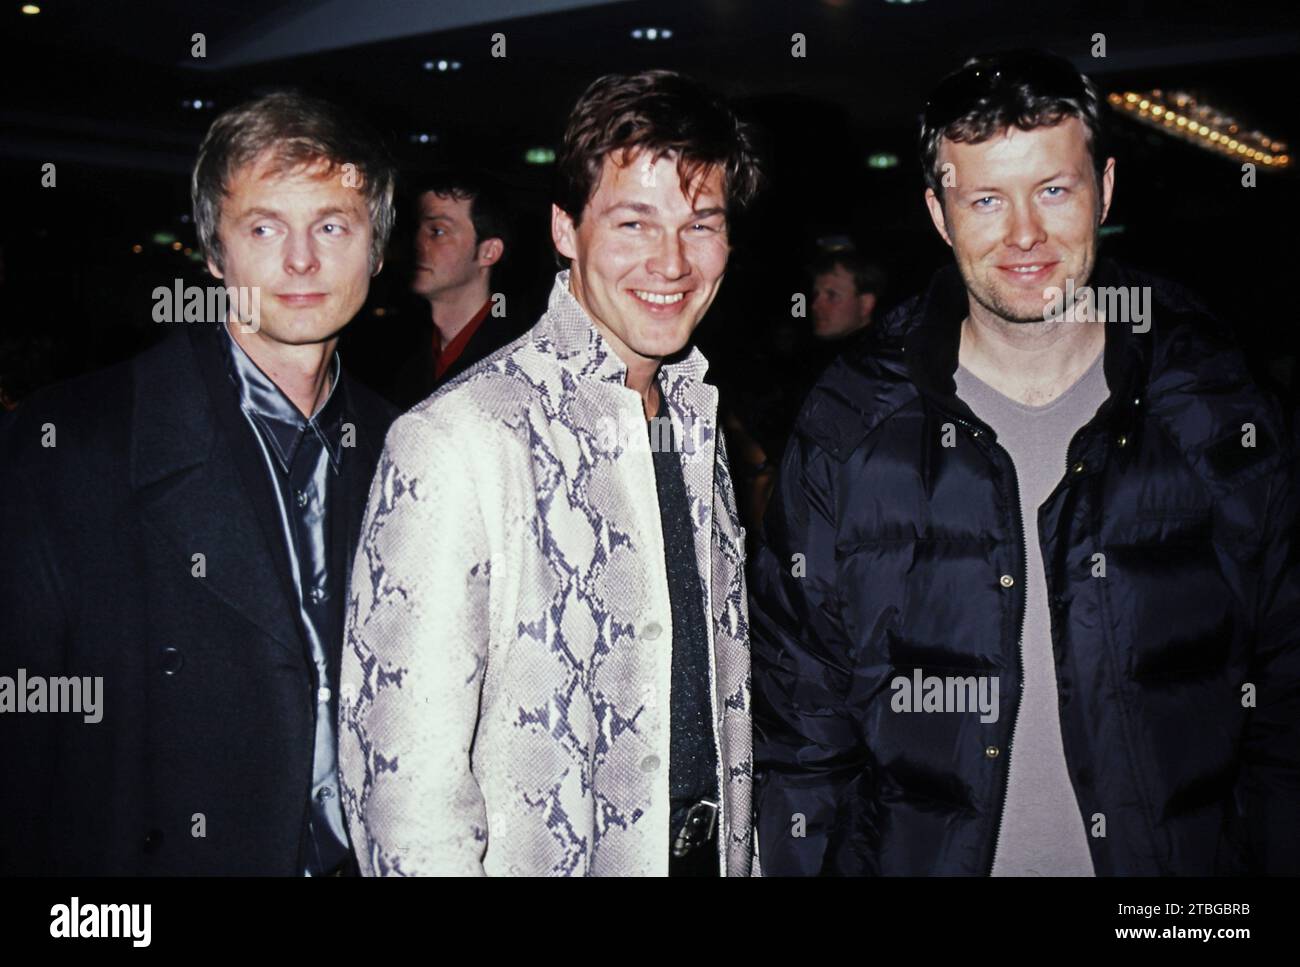 A-HA, alias a-ha, Kumpel Waaktaar-Savoy, Morten Harket, Magne Furuholmen, Pop-Band aus Norwegen, hier bei der Verleihung des ECHO 2000 in Hamburg. Stockfoto